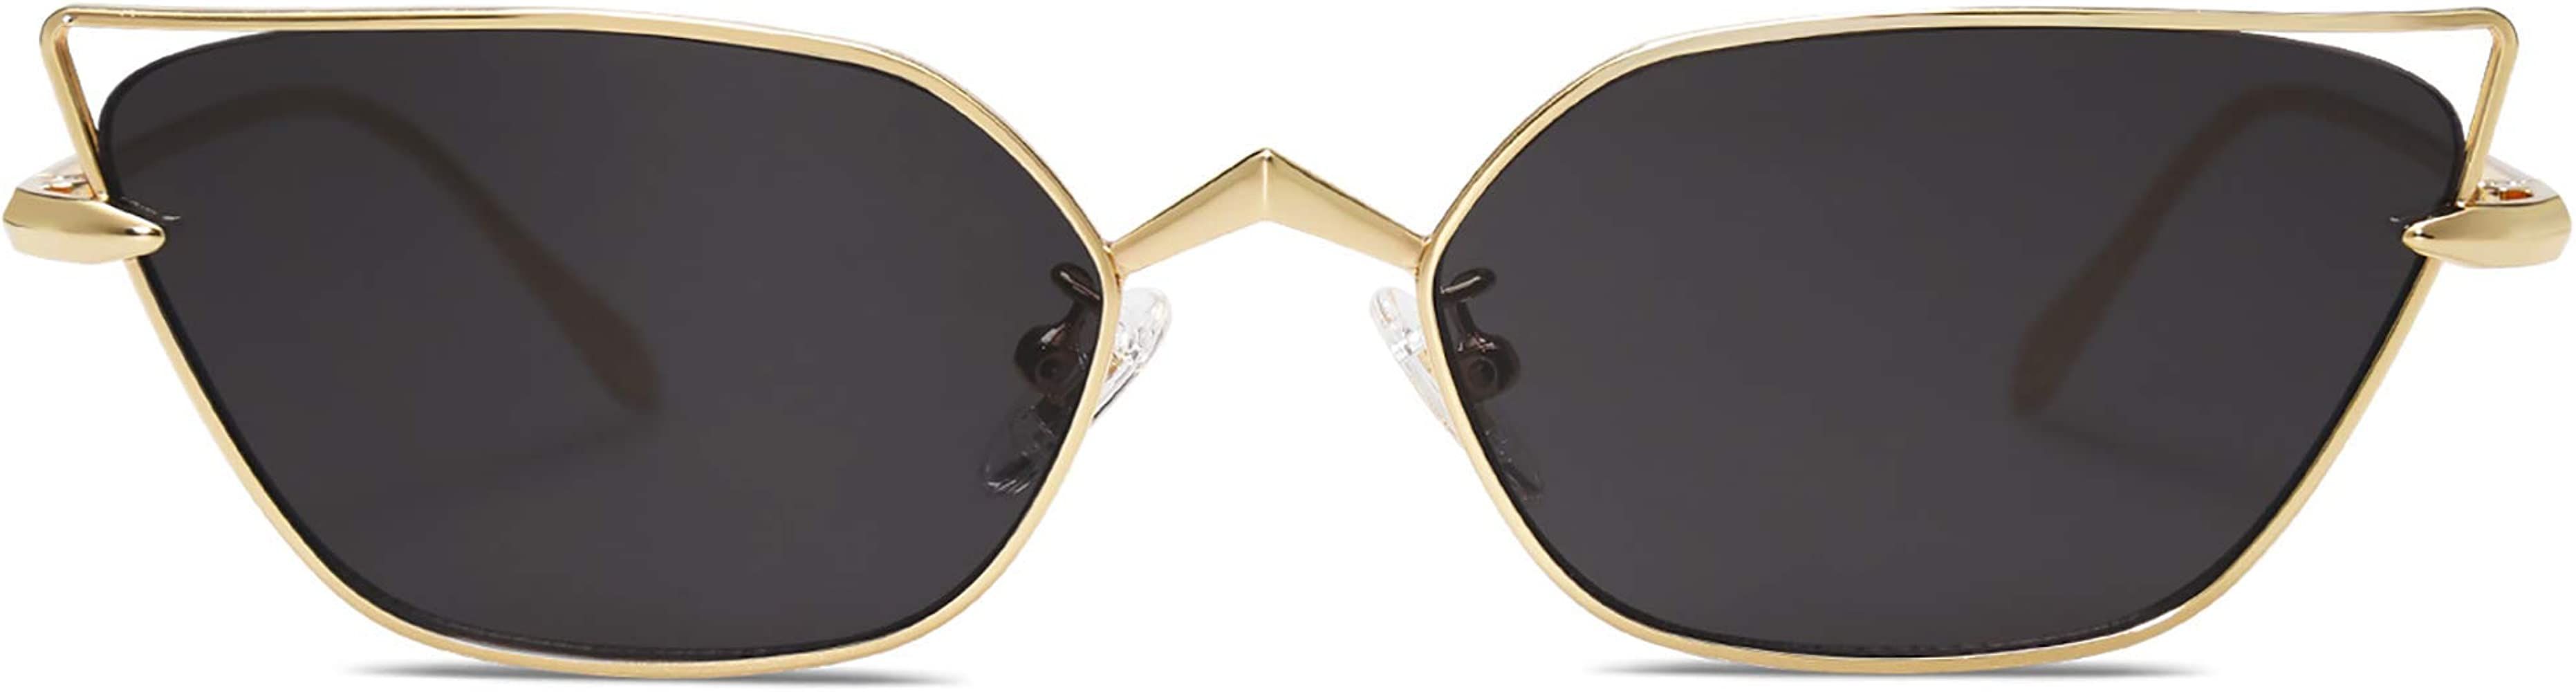 SOJOS Small Cateye Sunglasses Fashion Narrow Fun Trendy Rectangle Sunnies SJ1127 | Amazon (US)